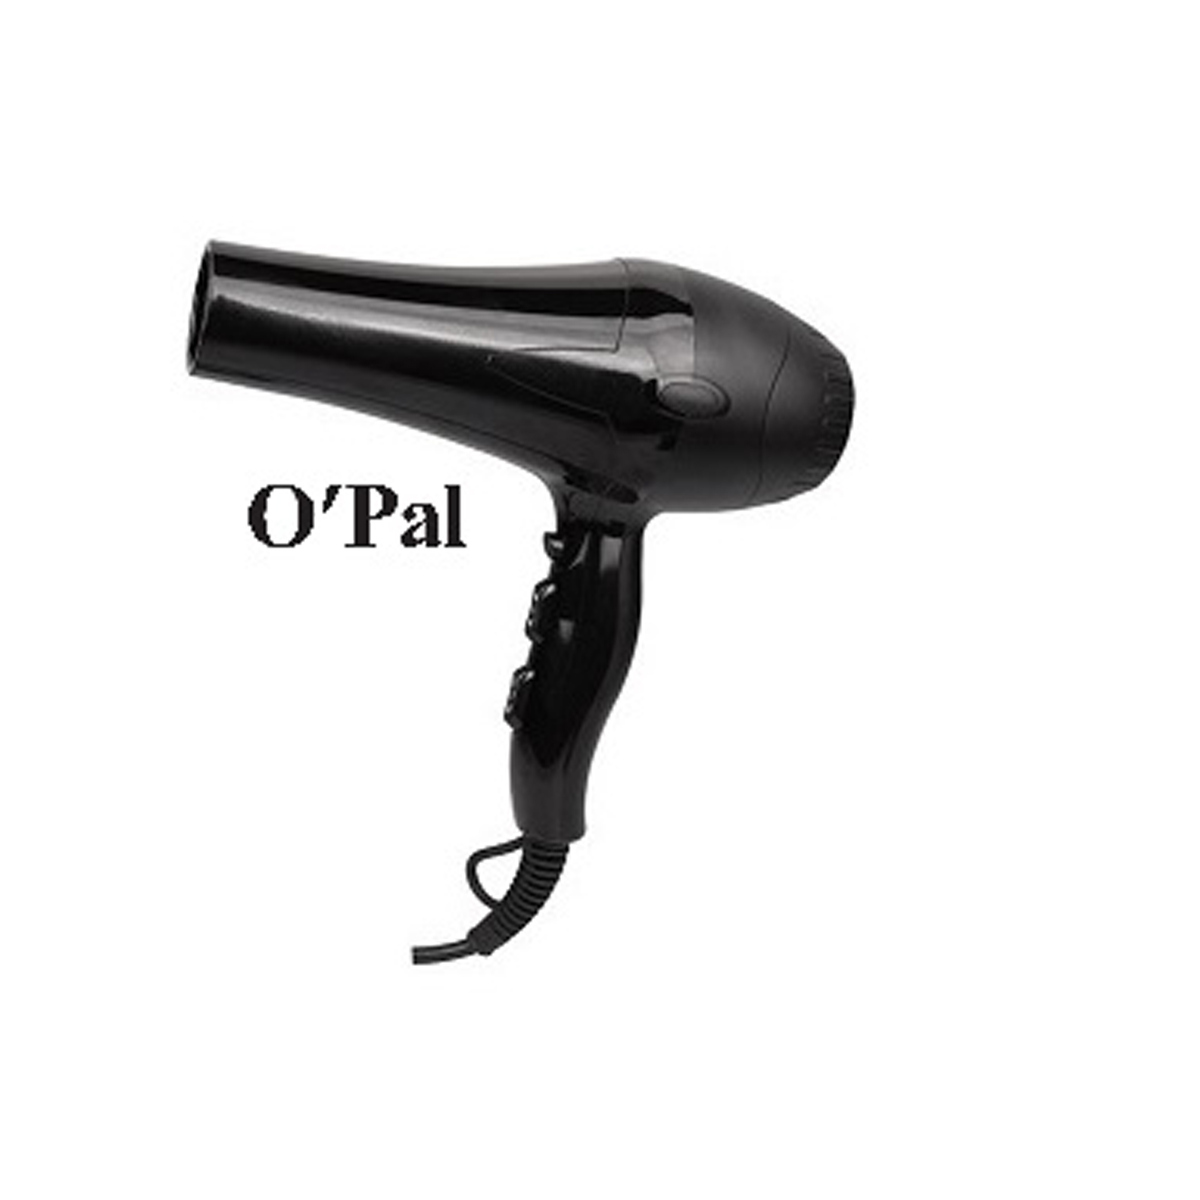 Opal Professional Salon Hair Dryer -OHD299B